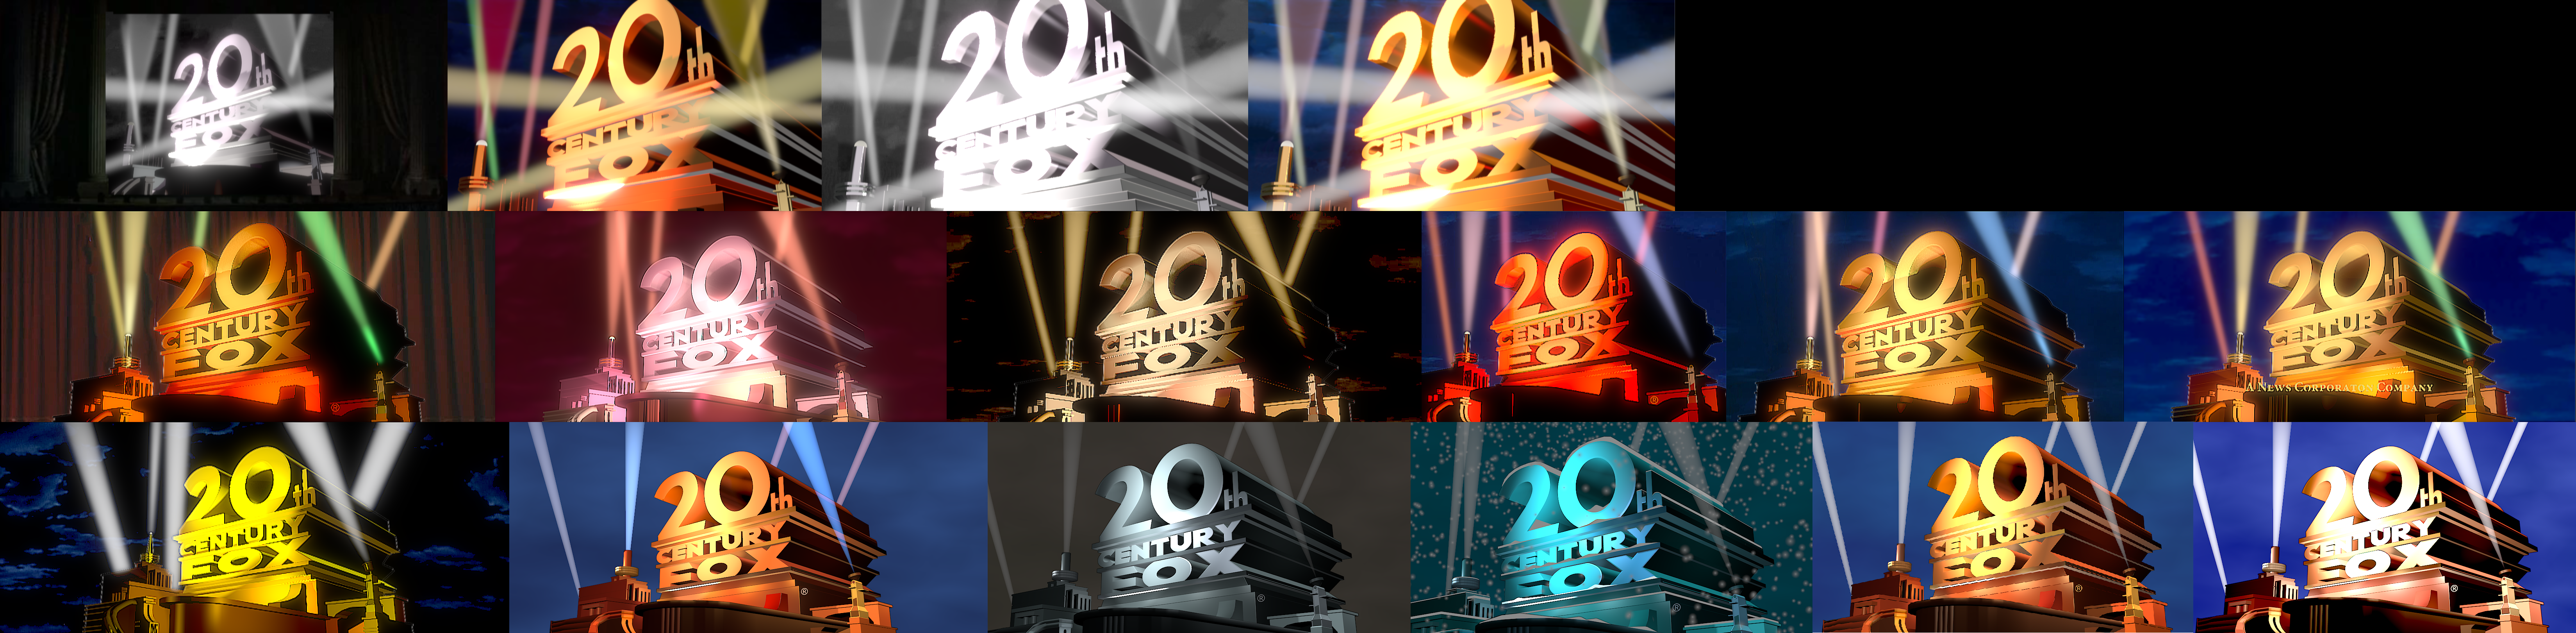 20th Century Fox logo by Krisz395 remake by TheGiraffeGuy2013 on DeviantArt